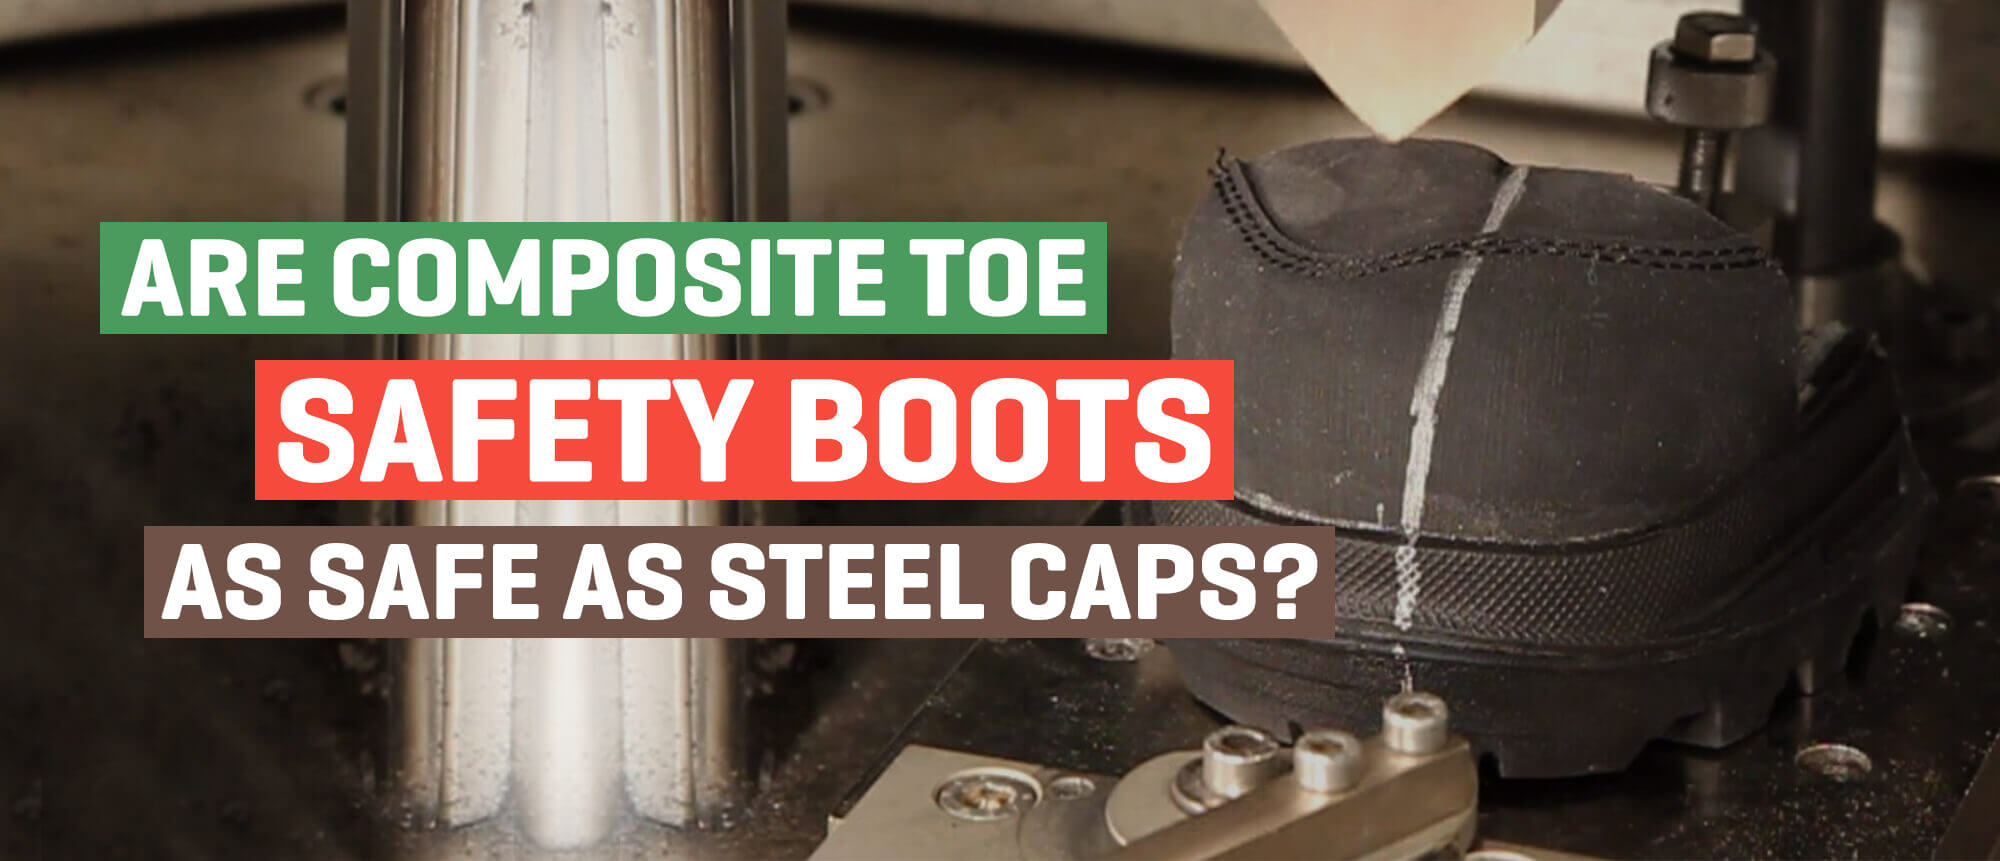 metal detector safe boots